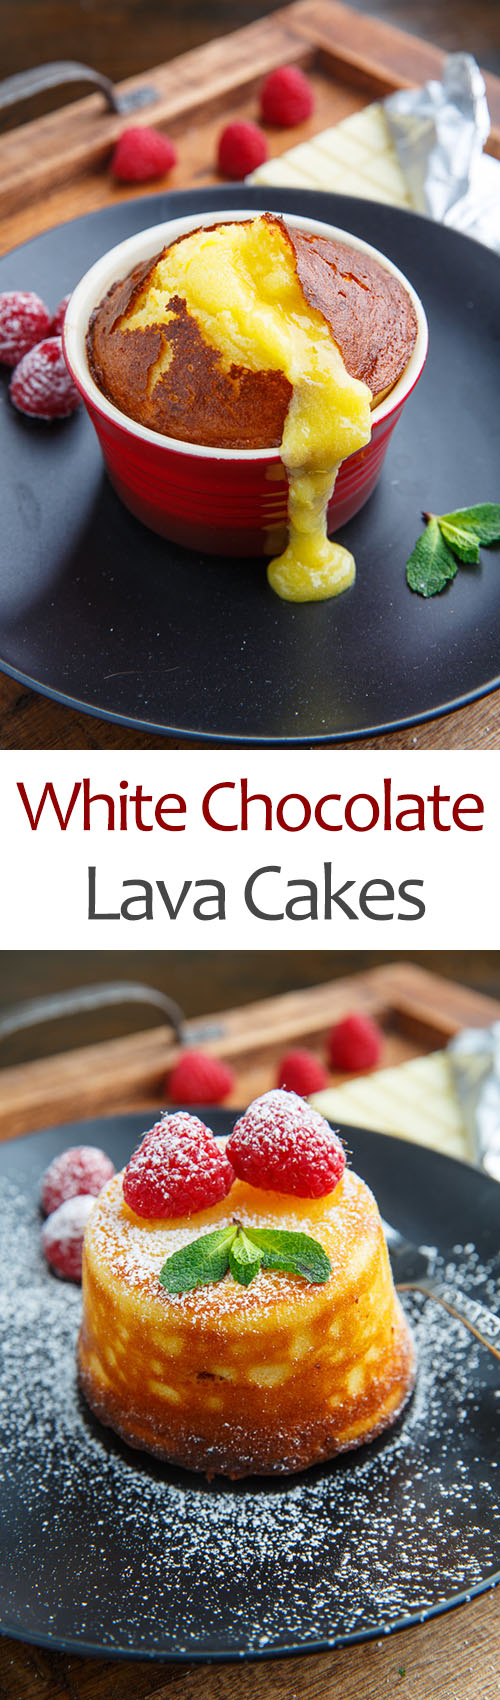 White Chocolate Lava Cakes